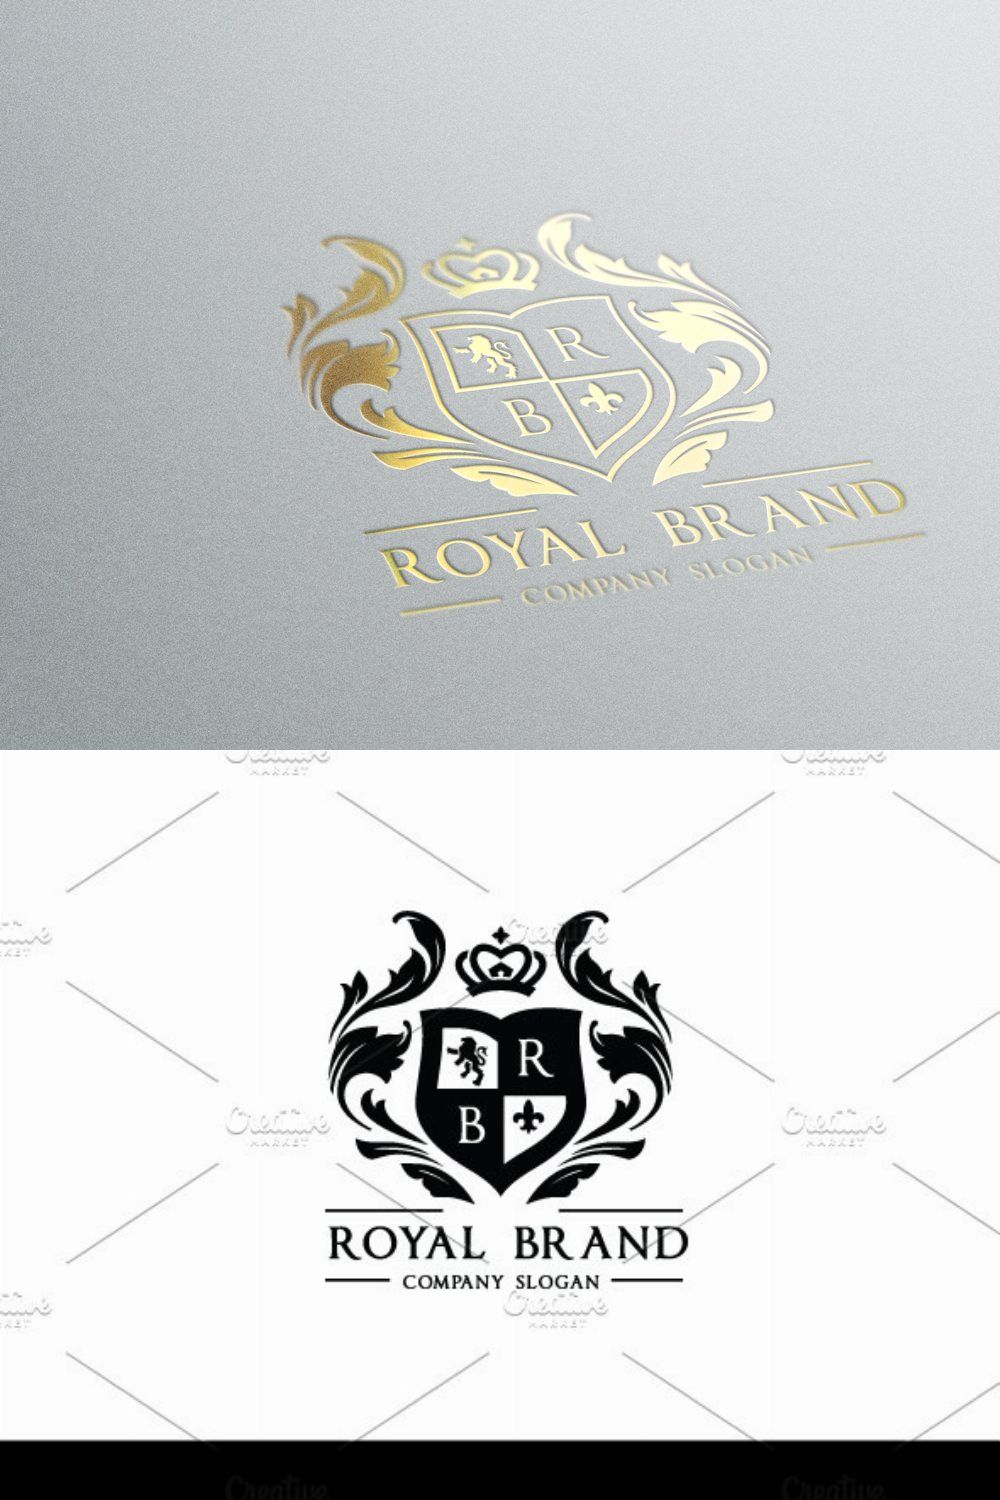 Royal Brand pinterest preview image.